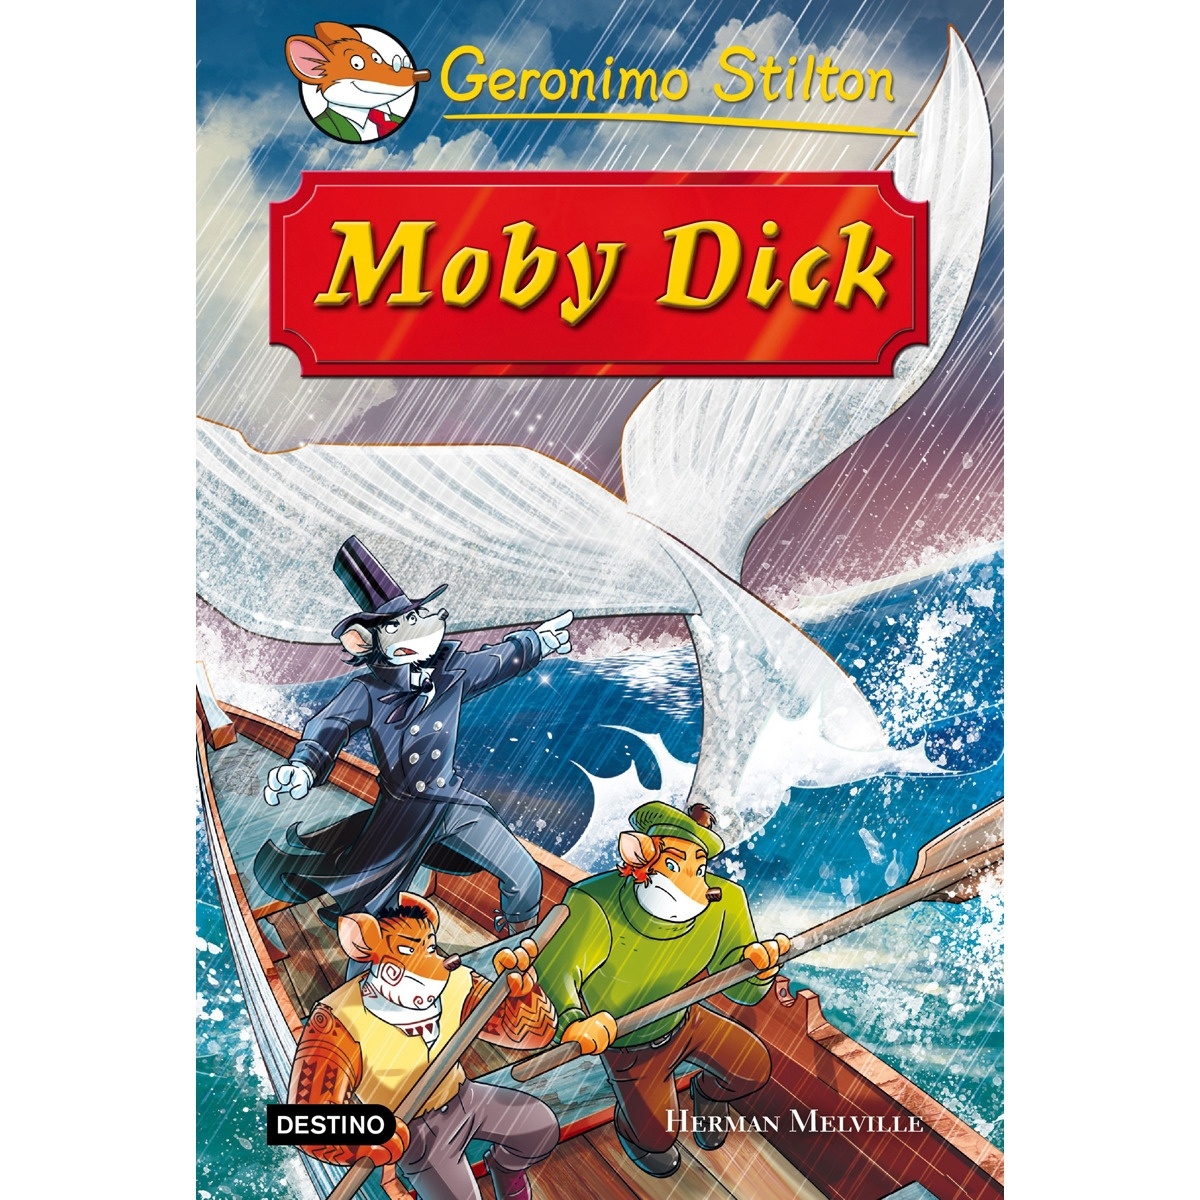 Moby Dick "Grandes Historias"